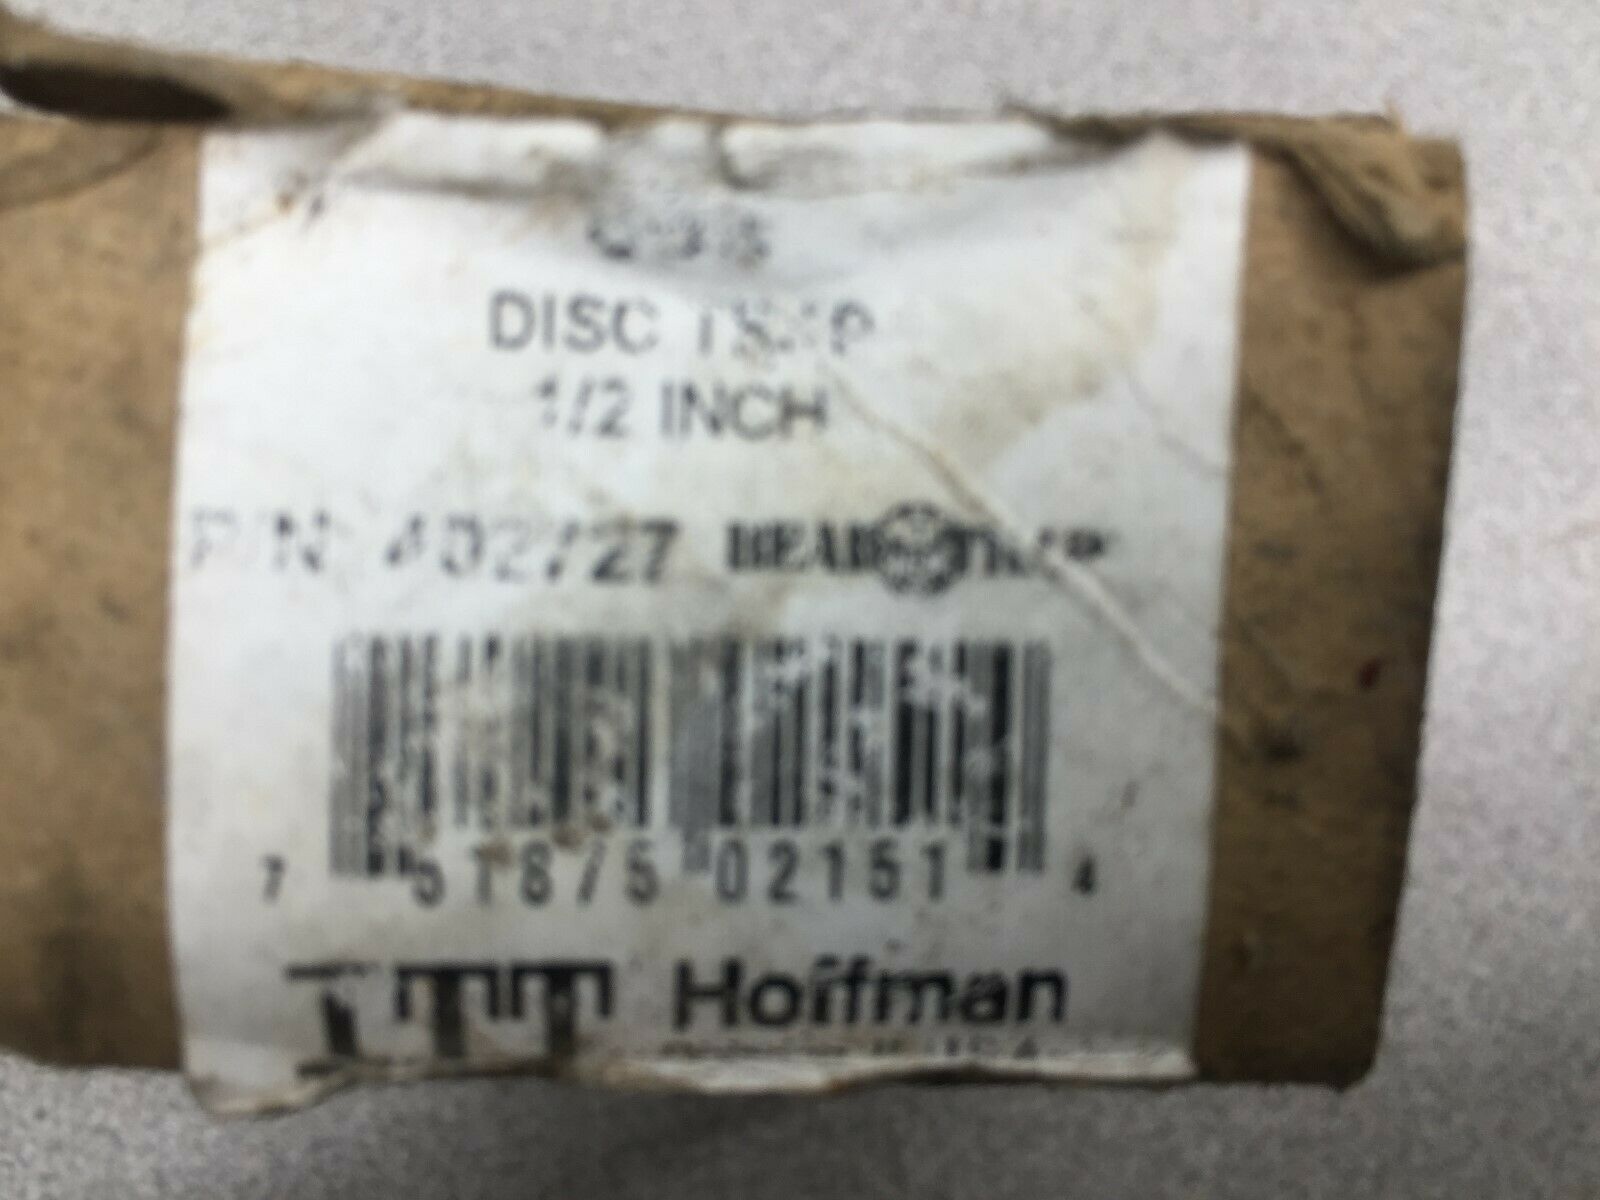 NEW IN BOX ITT HOFFMAN 1/2 THEMODISC STEAM TRAP NO. 656